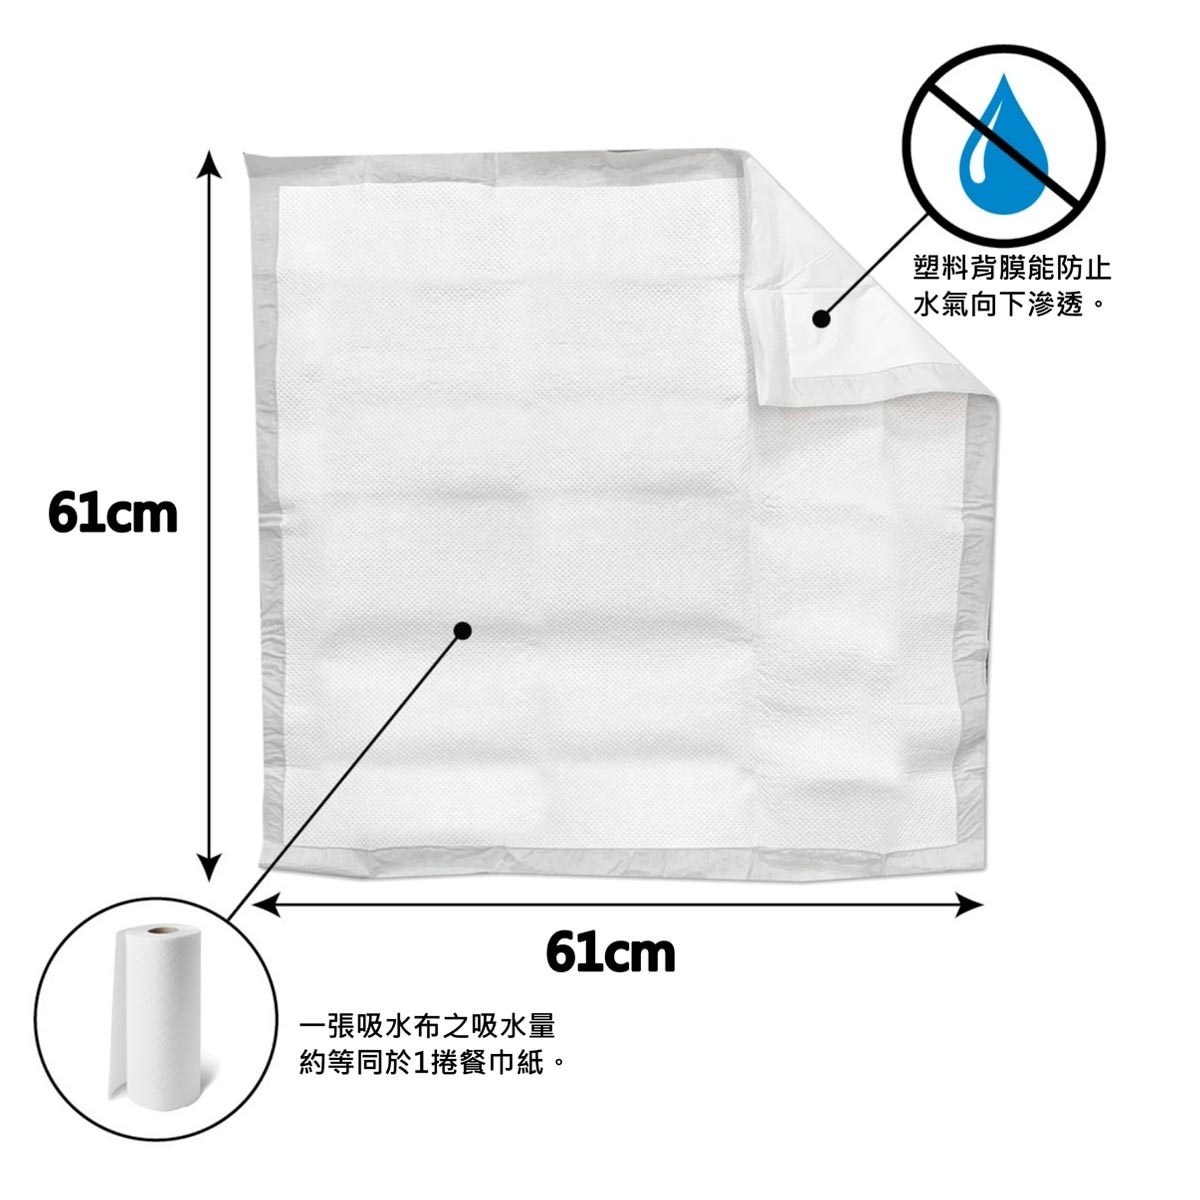 QUICK 室內堵漏組合包，一張吸水布之吸水量約等同於1捲餐巾紙，塑料背膜能防止水氣向下滲透。